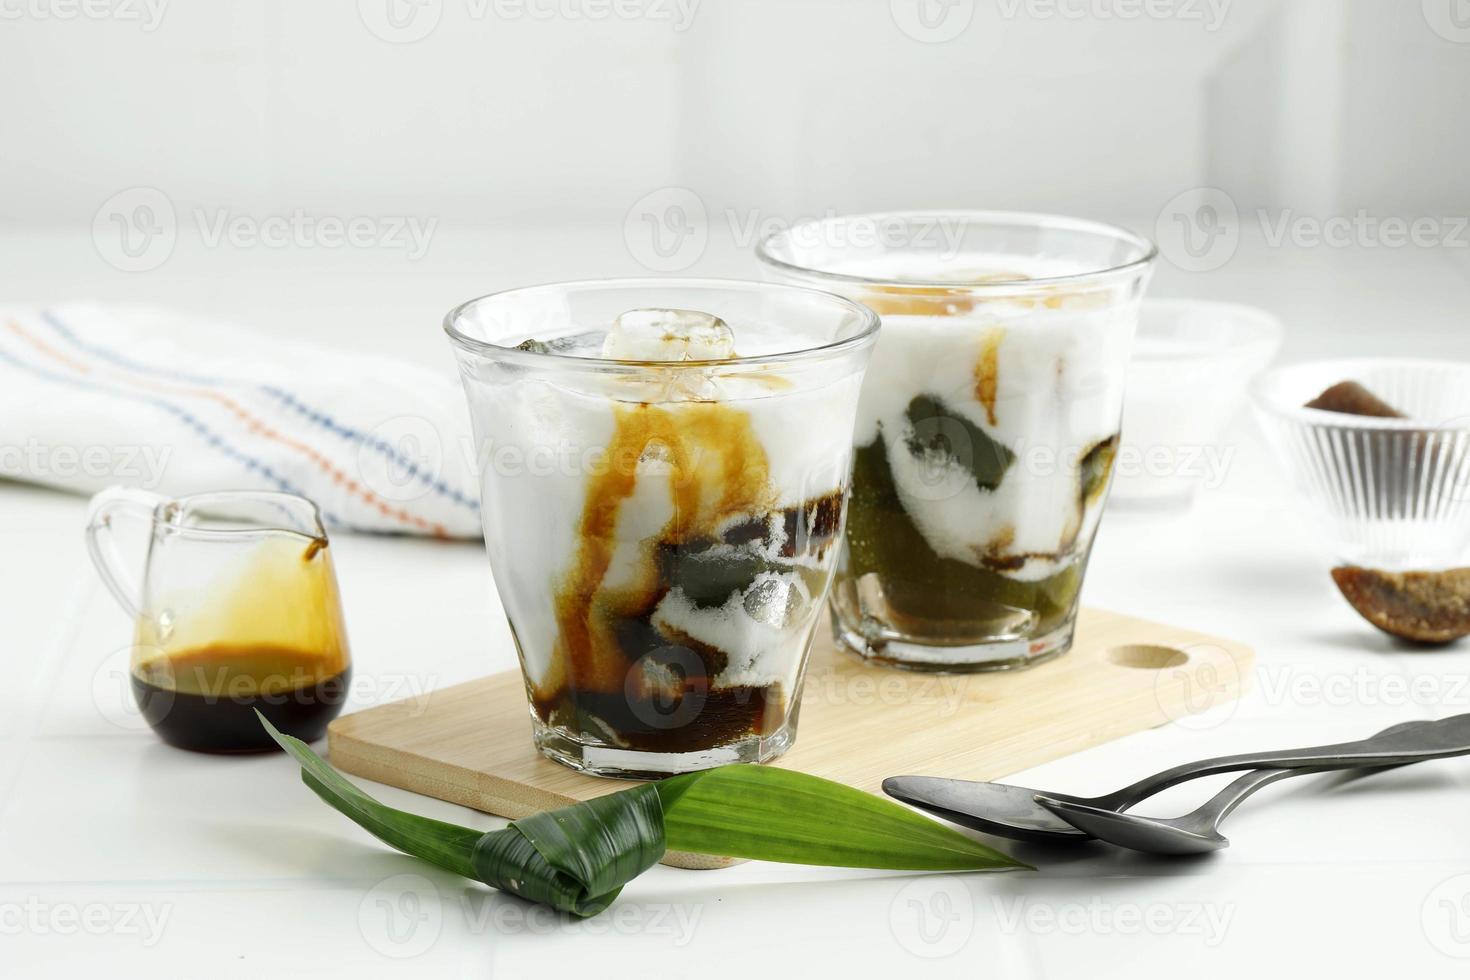 es daluma. bevanda fredda balinese a base di gelatina d'erba con latte di cocco e sciroppo di zucchero di palma. foto